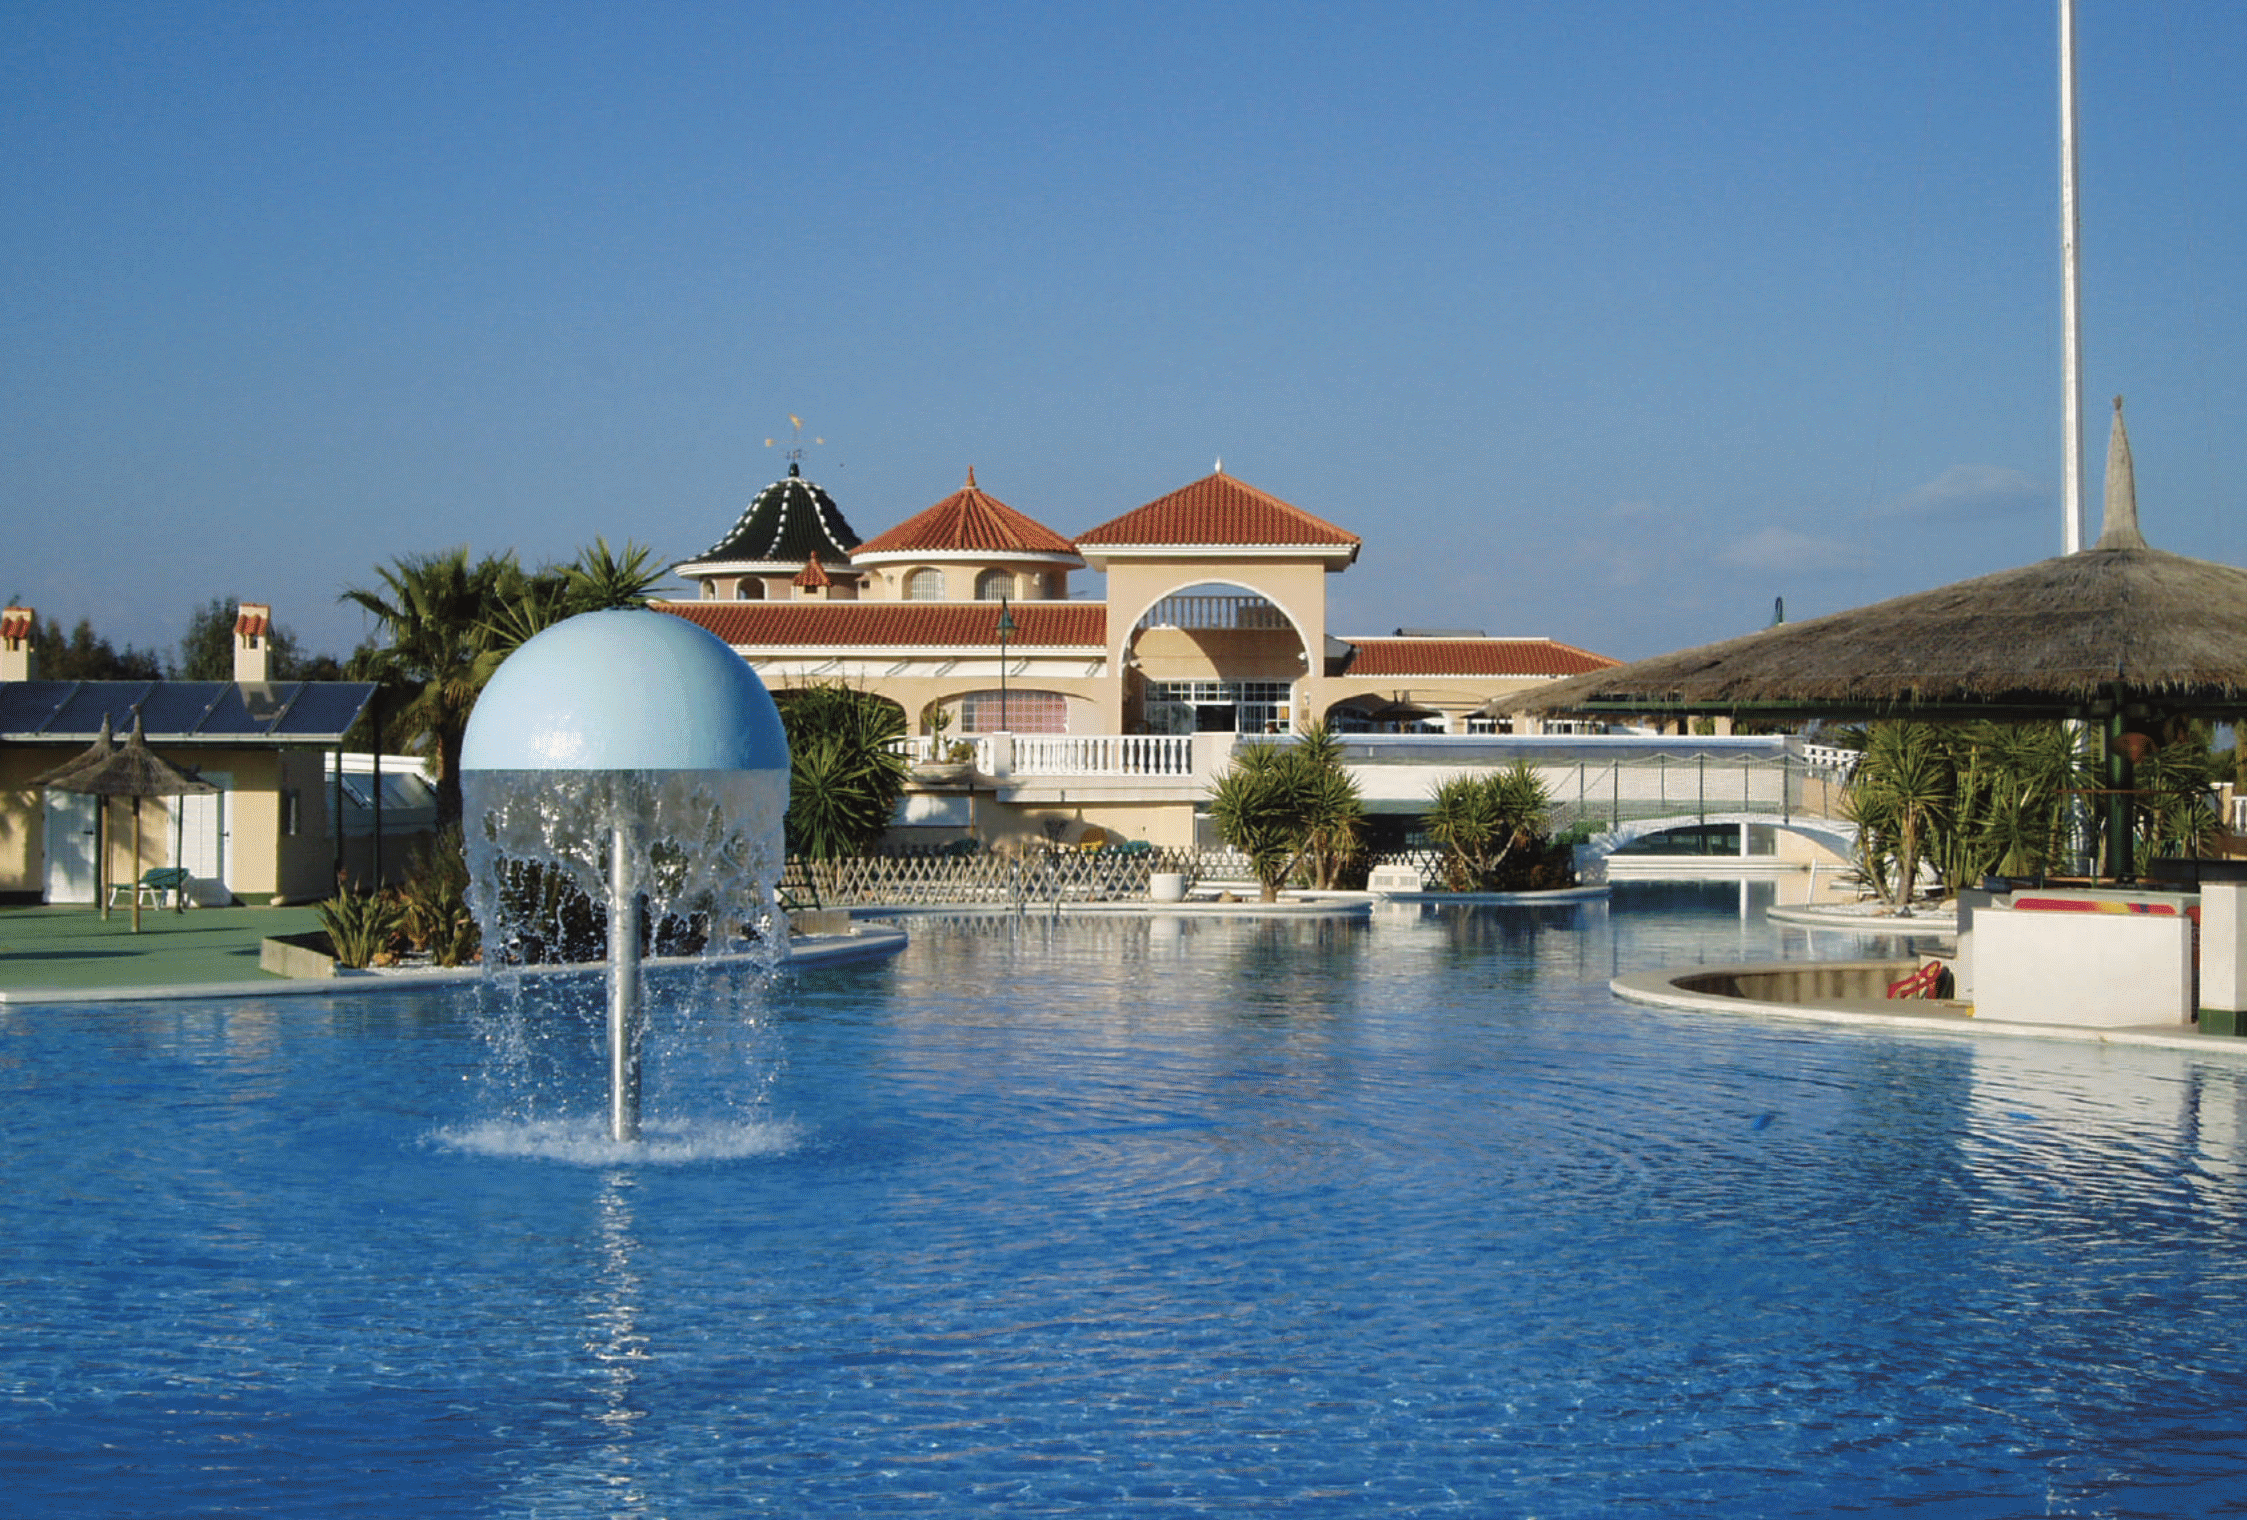 Bahía Pirata pool in 1997